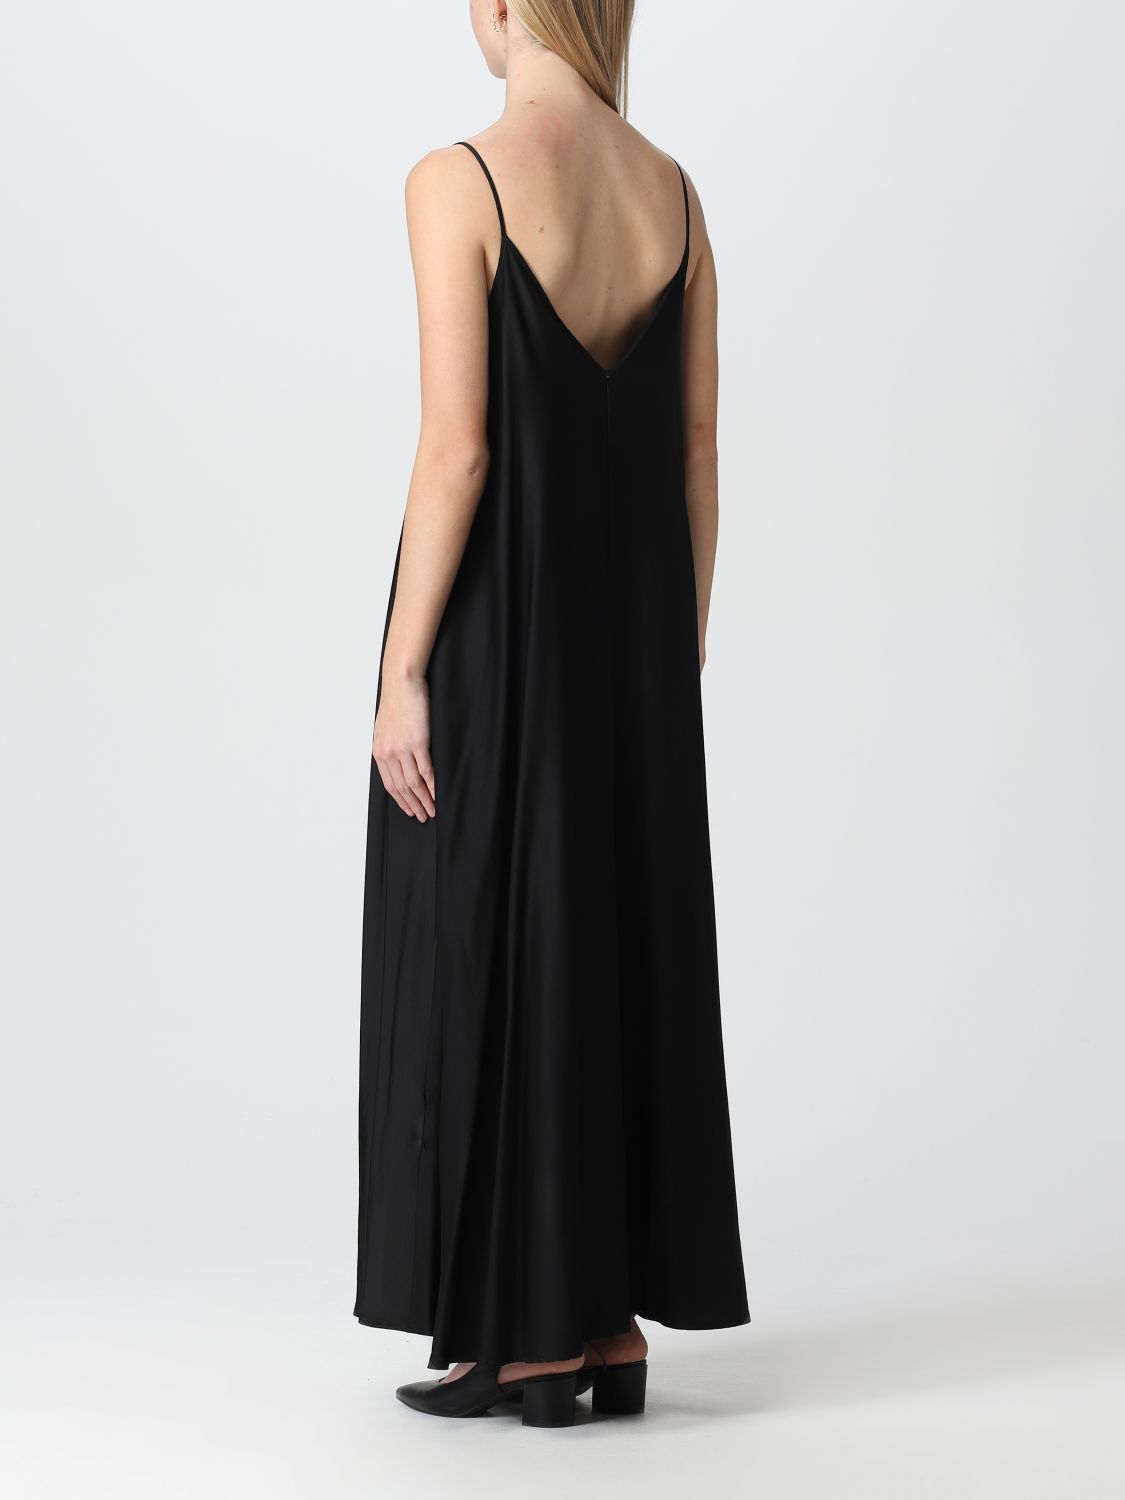 KAOS: dress for woman - Black | Kaos dress PPJAR005 online on GIGLIO.COM